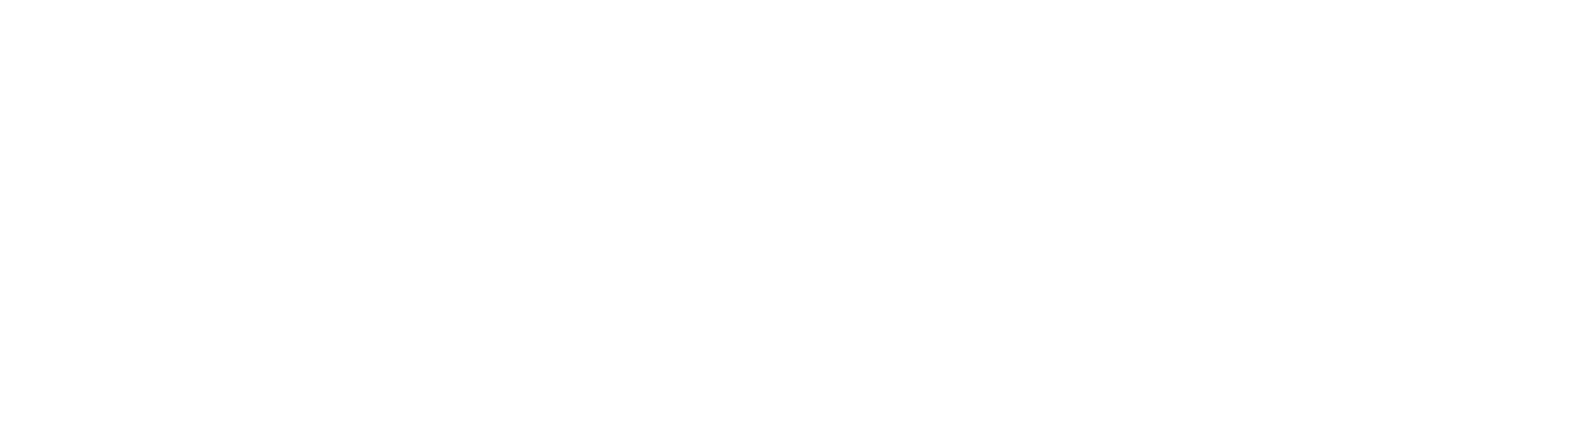 Faro Technologies
 logo large for dark backgrounds (transparent PNG)